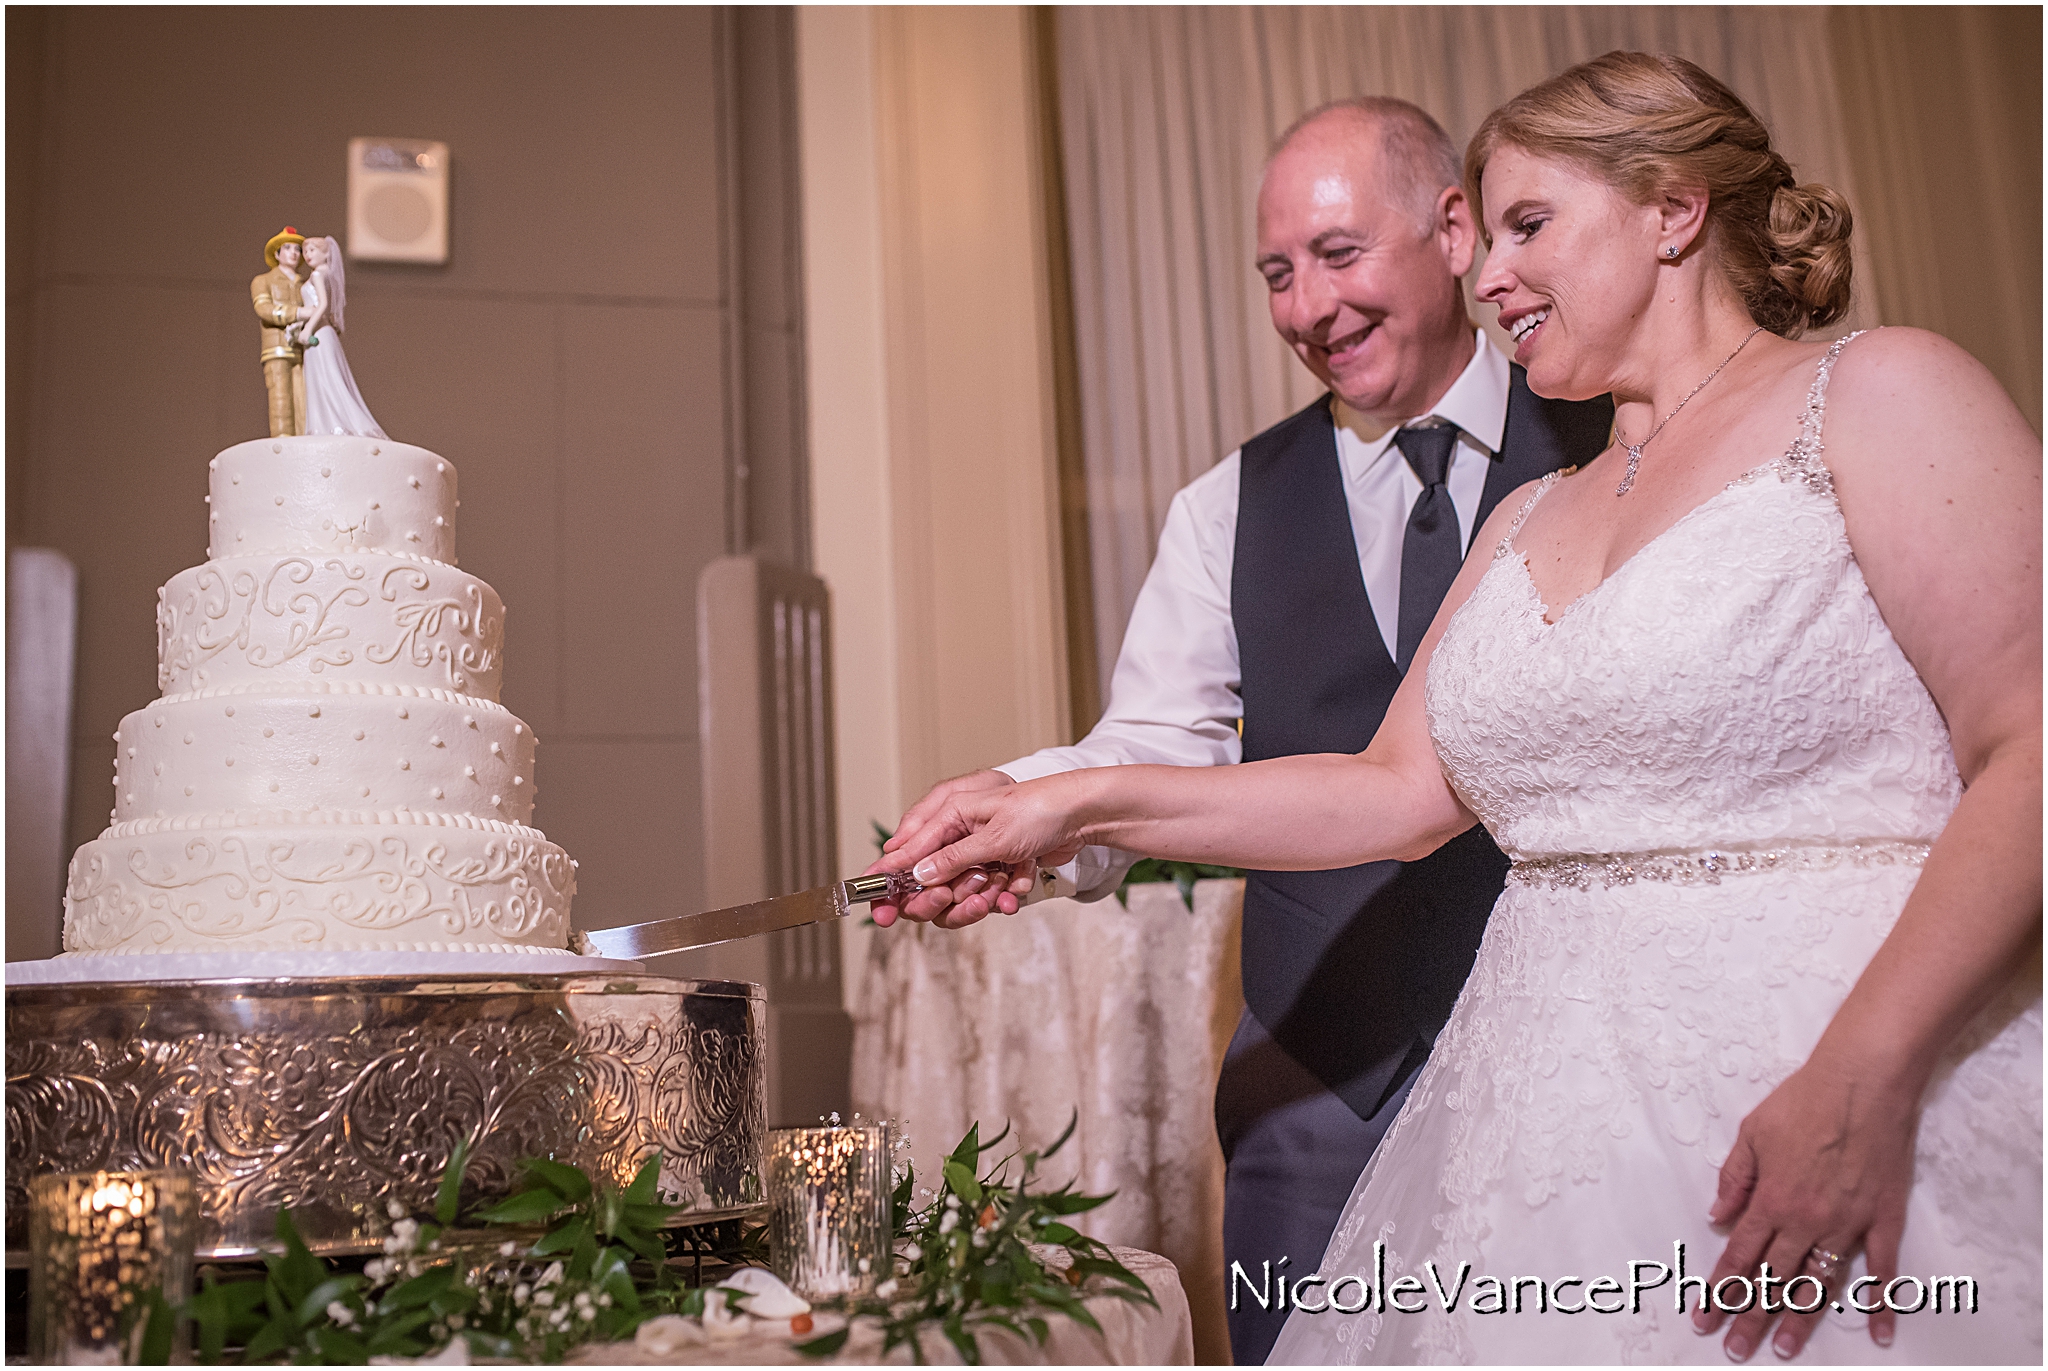 The couple cut their wedding cake prepared by Sugar Cain Bakery.